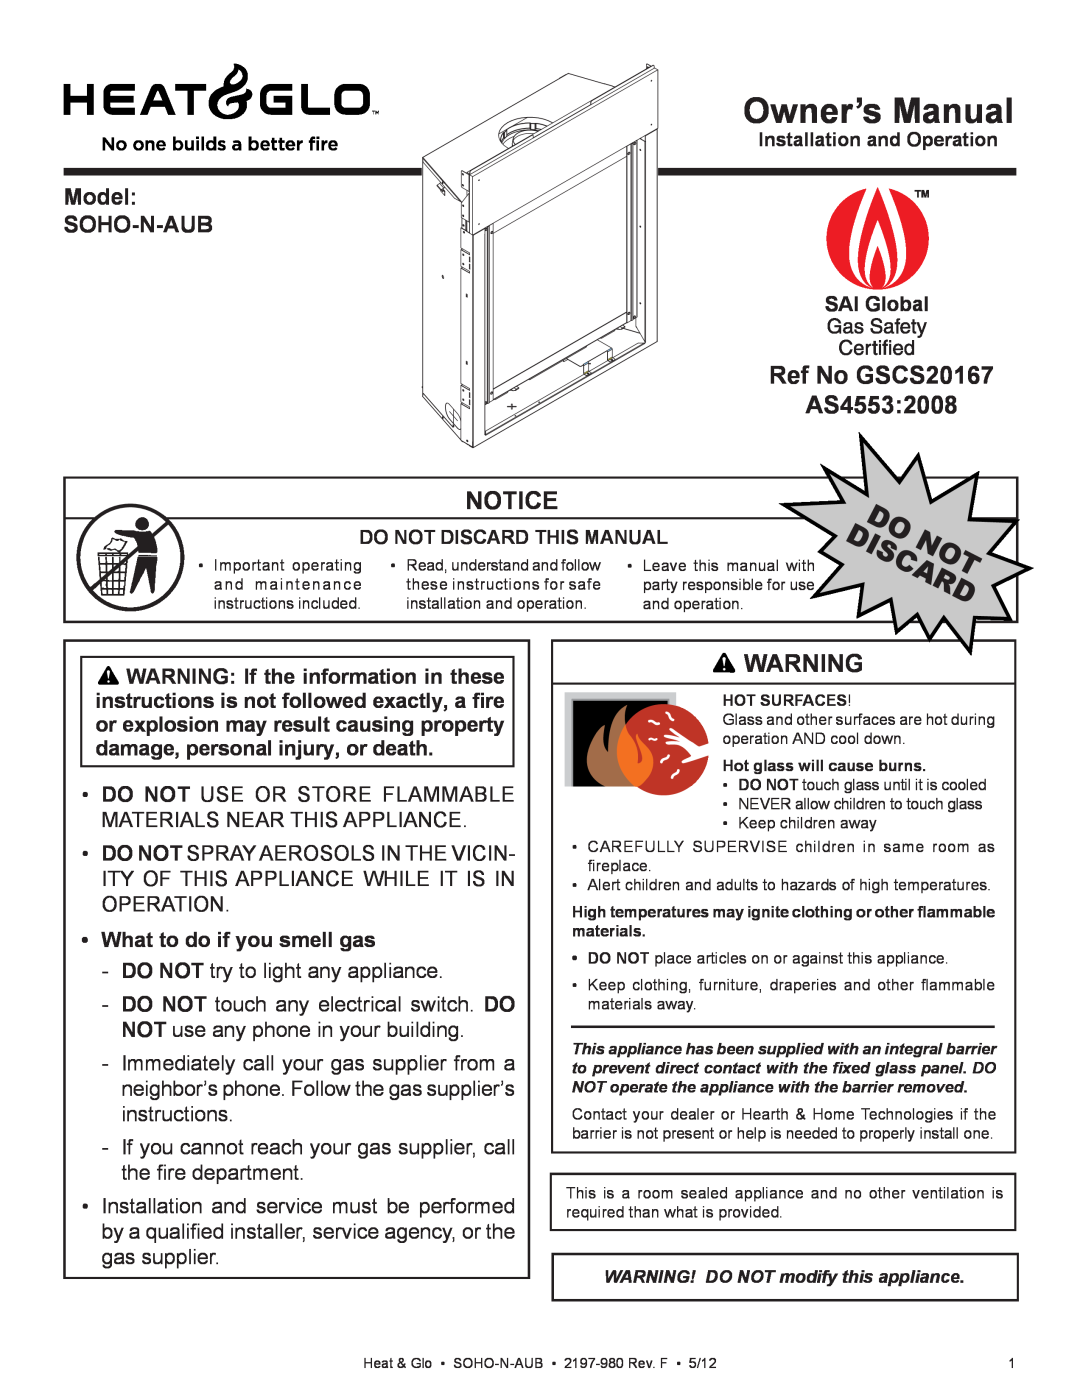 Heat & Glo LifeStyle 2197-980 owner manual Ref No GSCS20167 AS4553:2008, Notice, Model: SOHO-N-AUB, SAI Global 